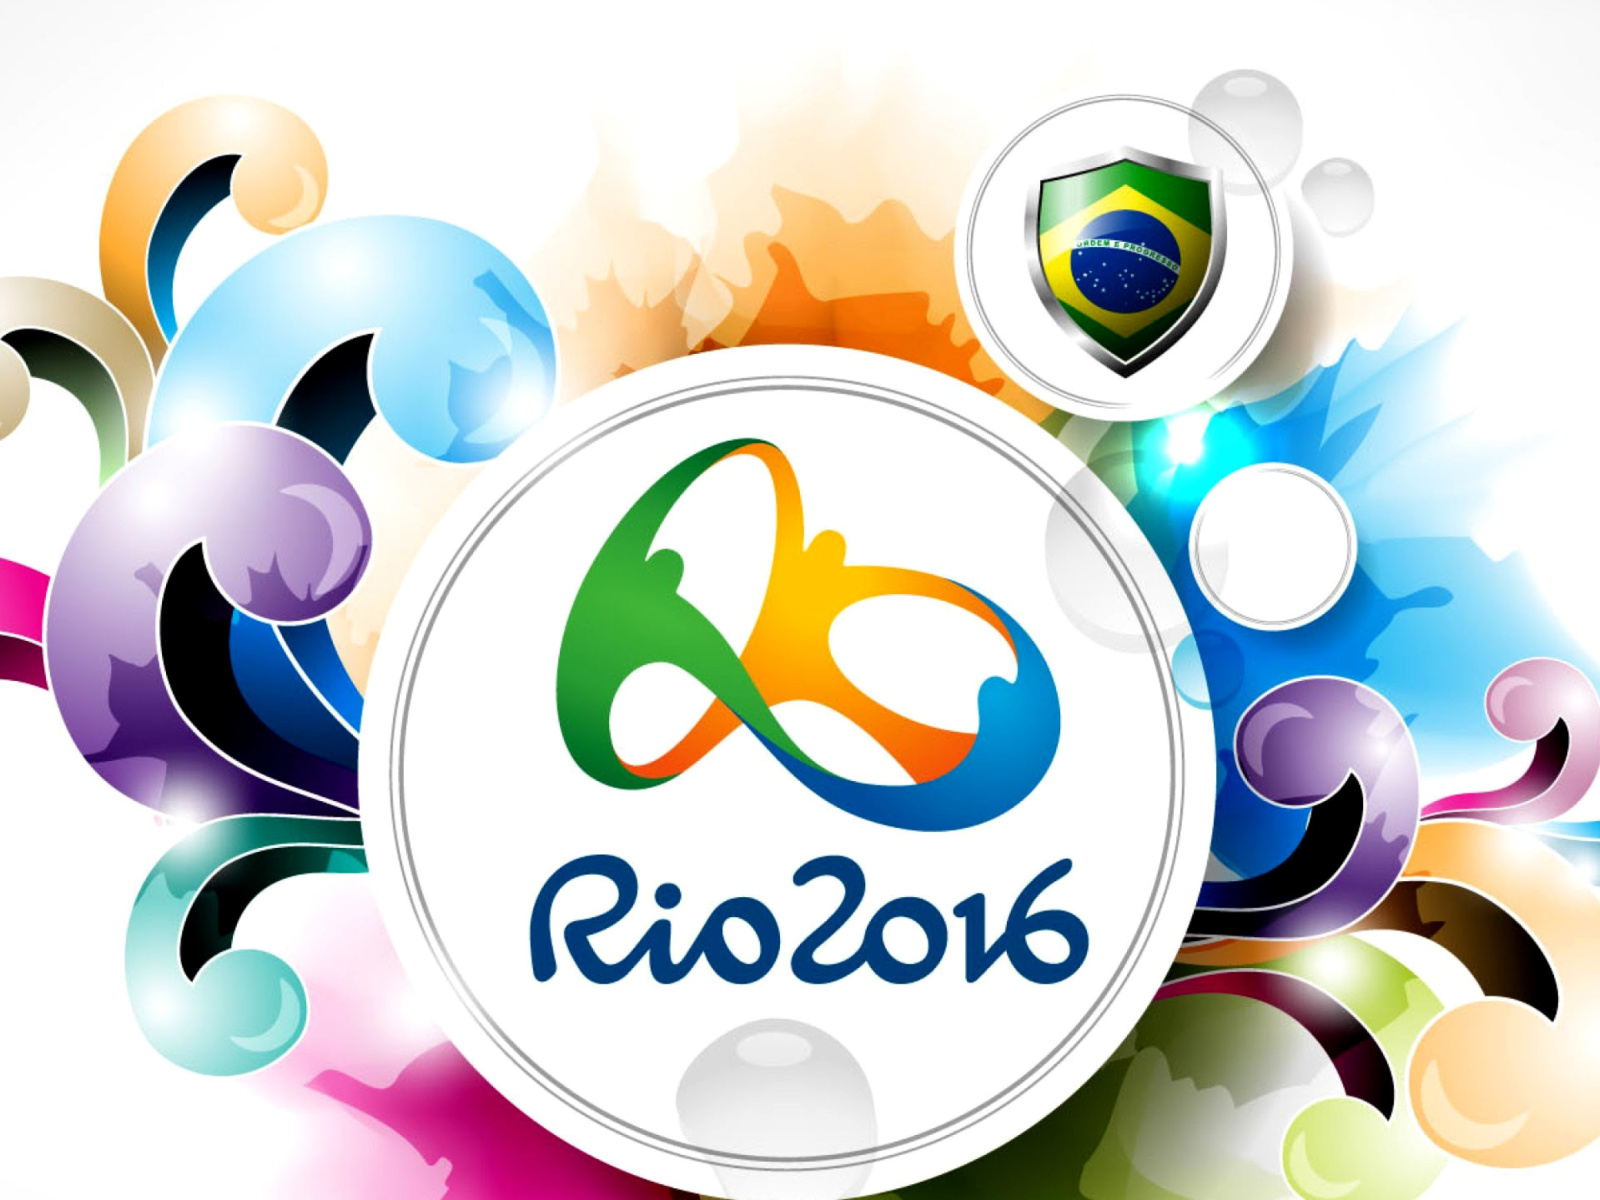 Olympic Games Rio 2016 wallpaper 1600x1200